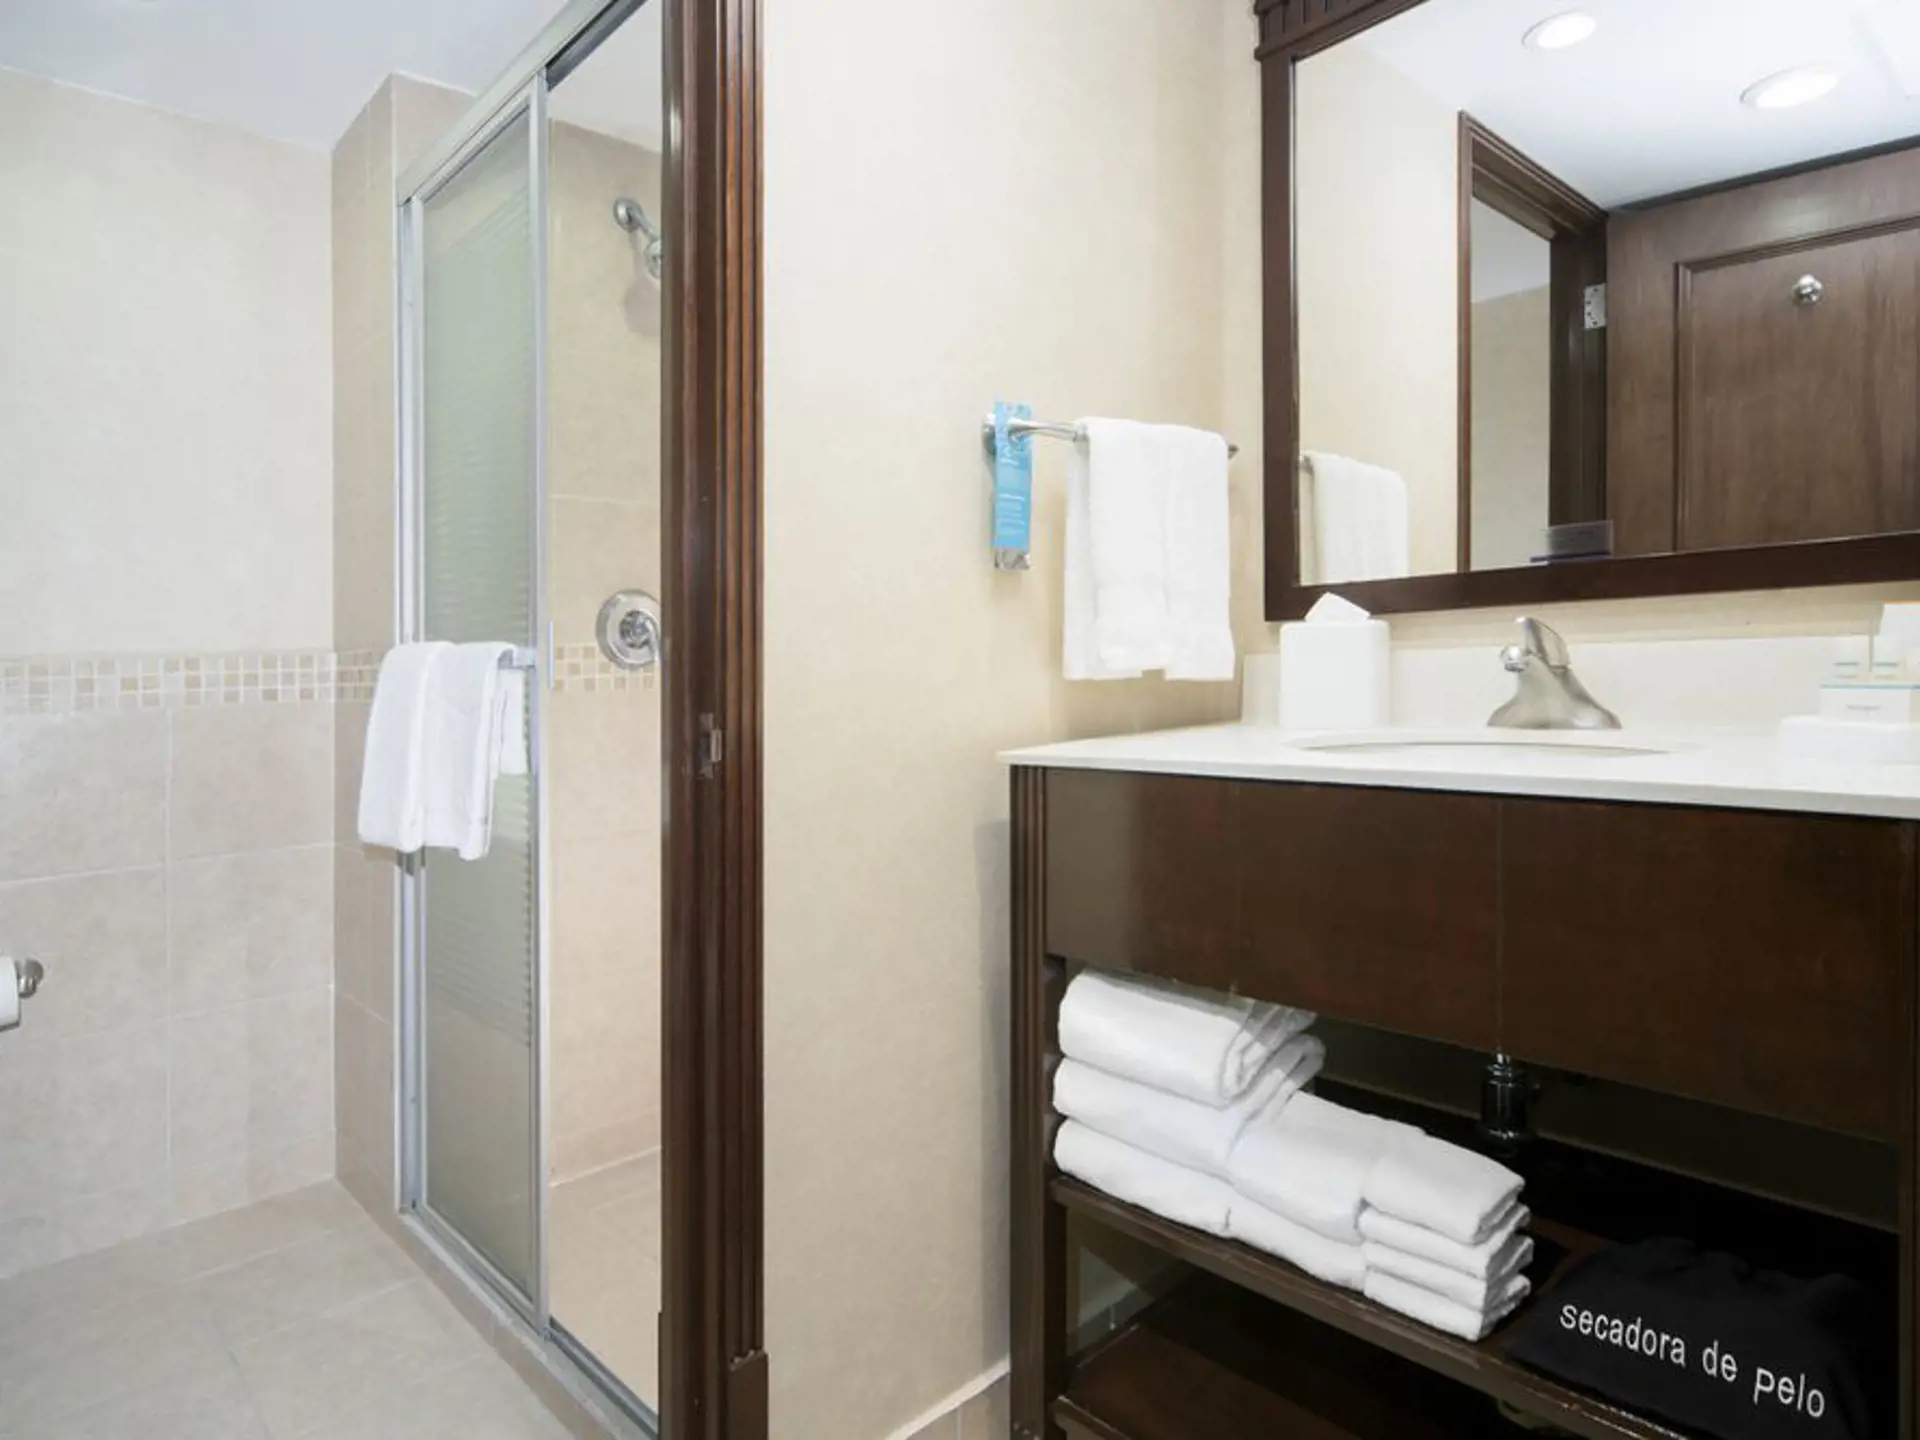 Hamptonn Inn & Suites Mex City - Bathroom.jpg